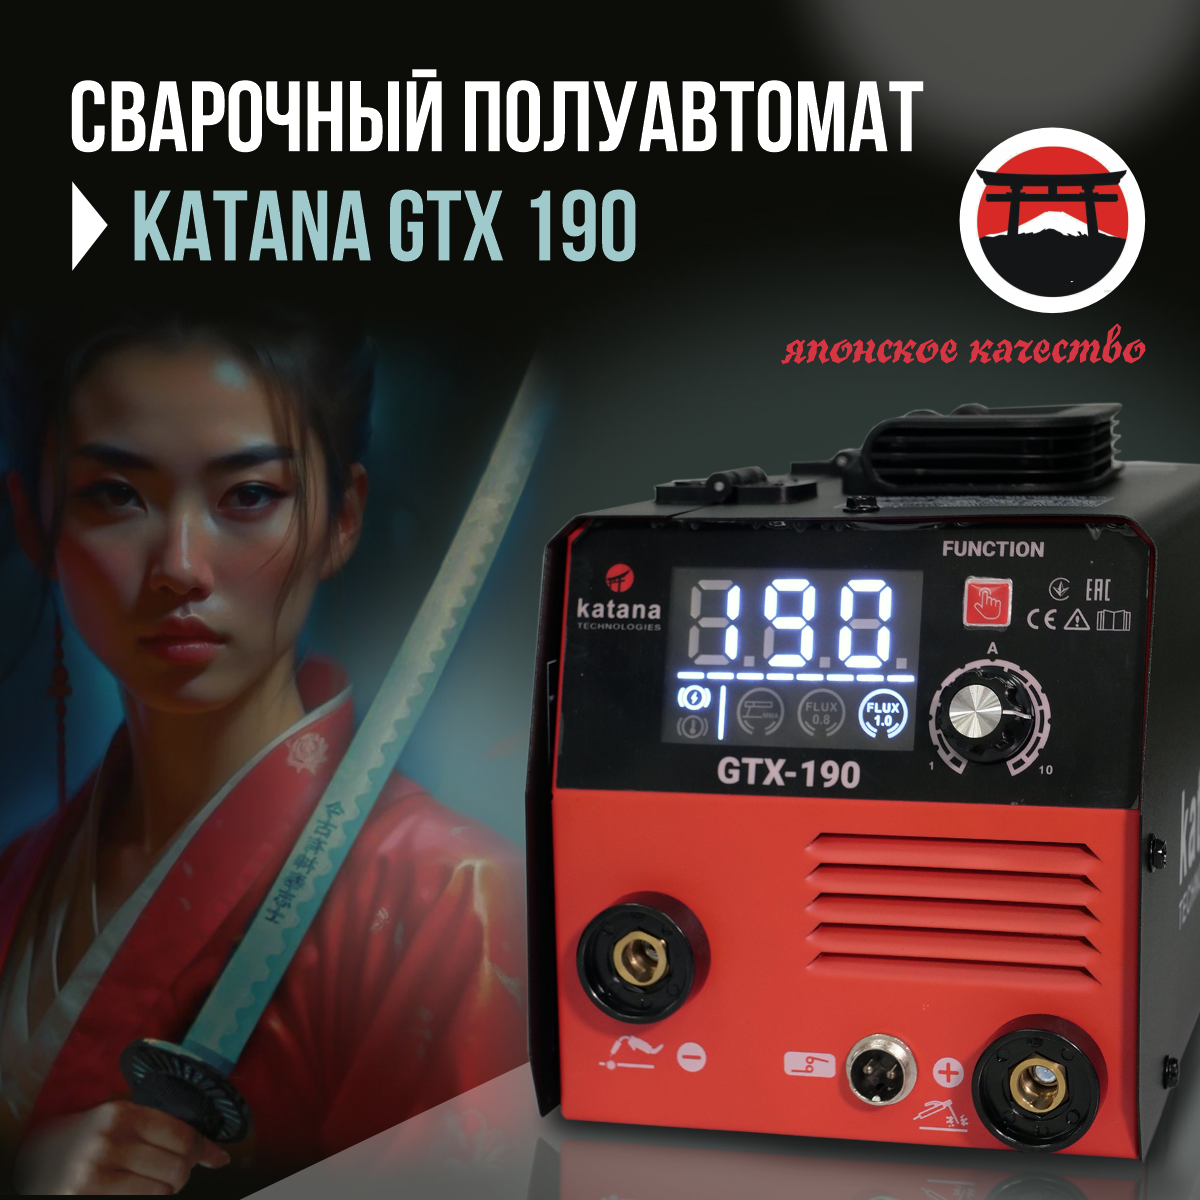 Сварочный аппарат полуавтомат KATANA GTX-190 сварка без газа на 190 А